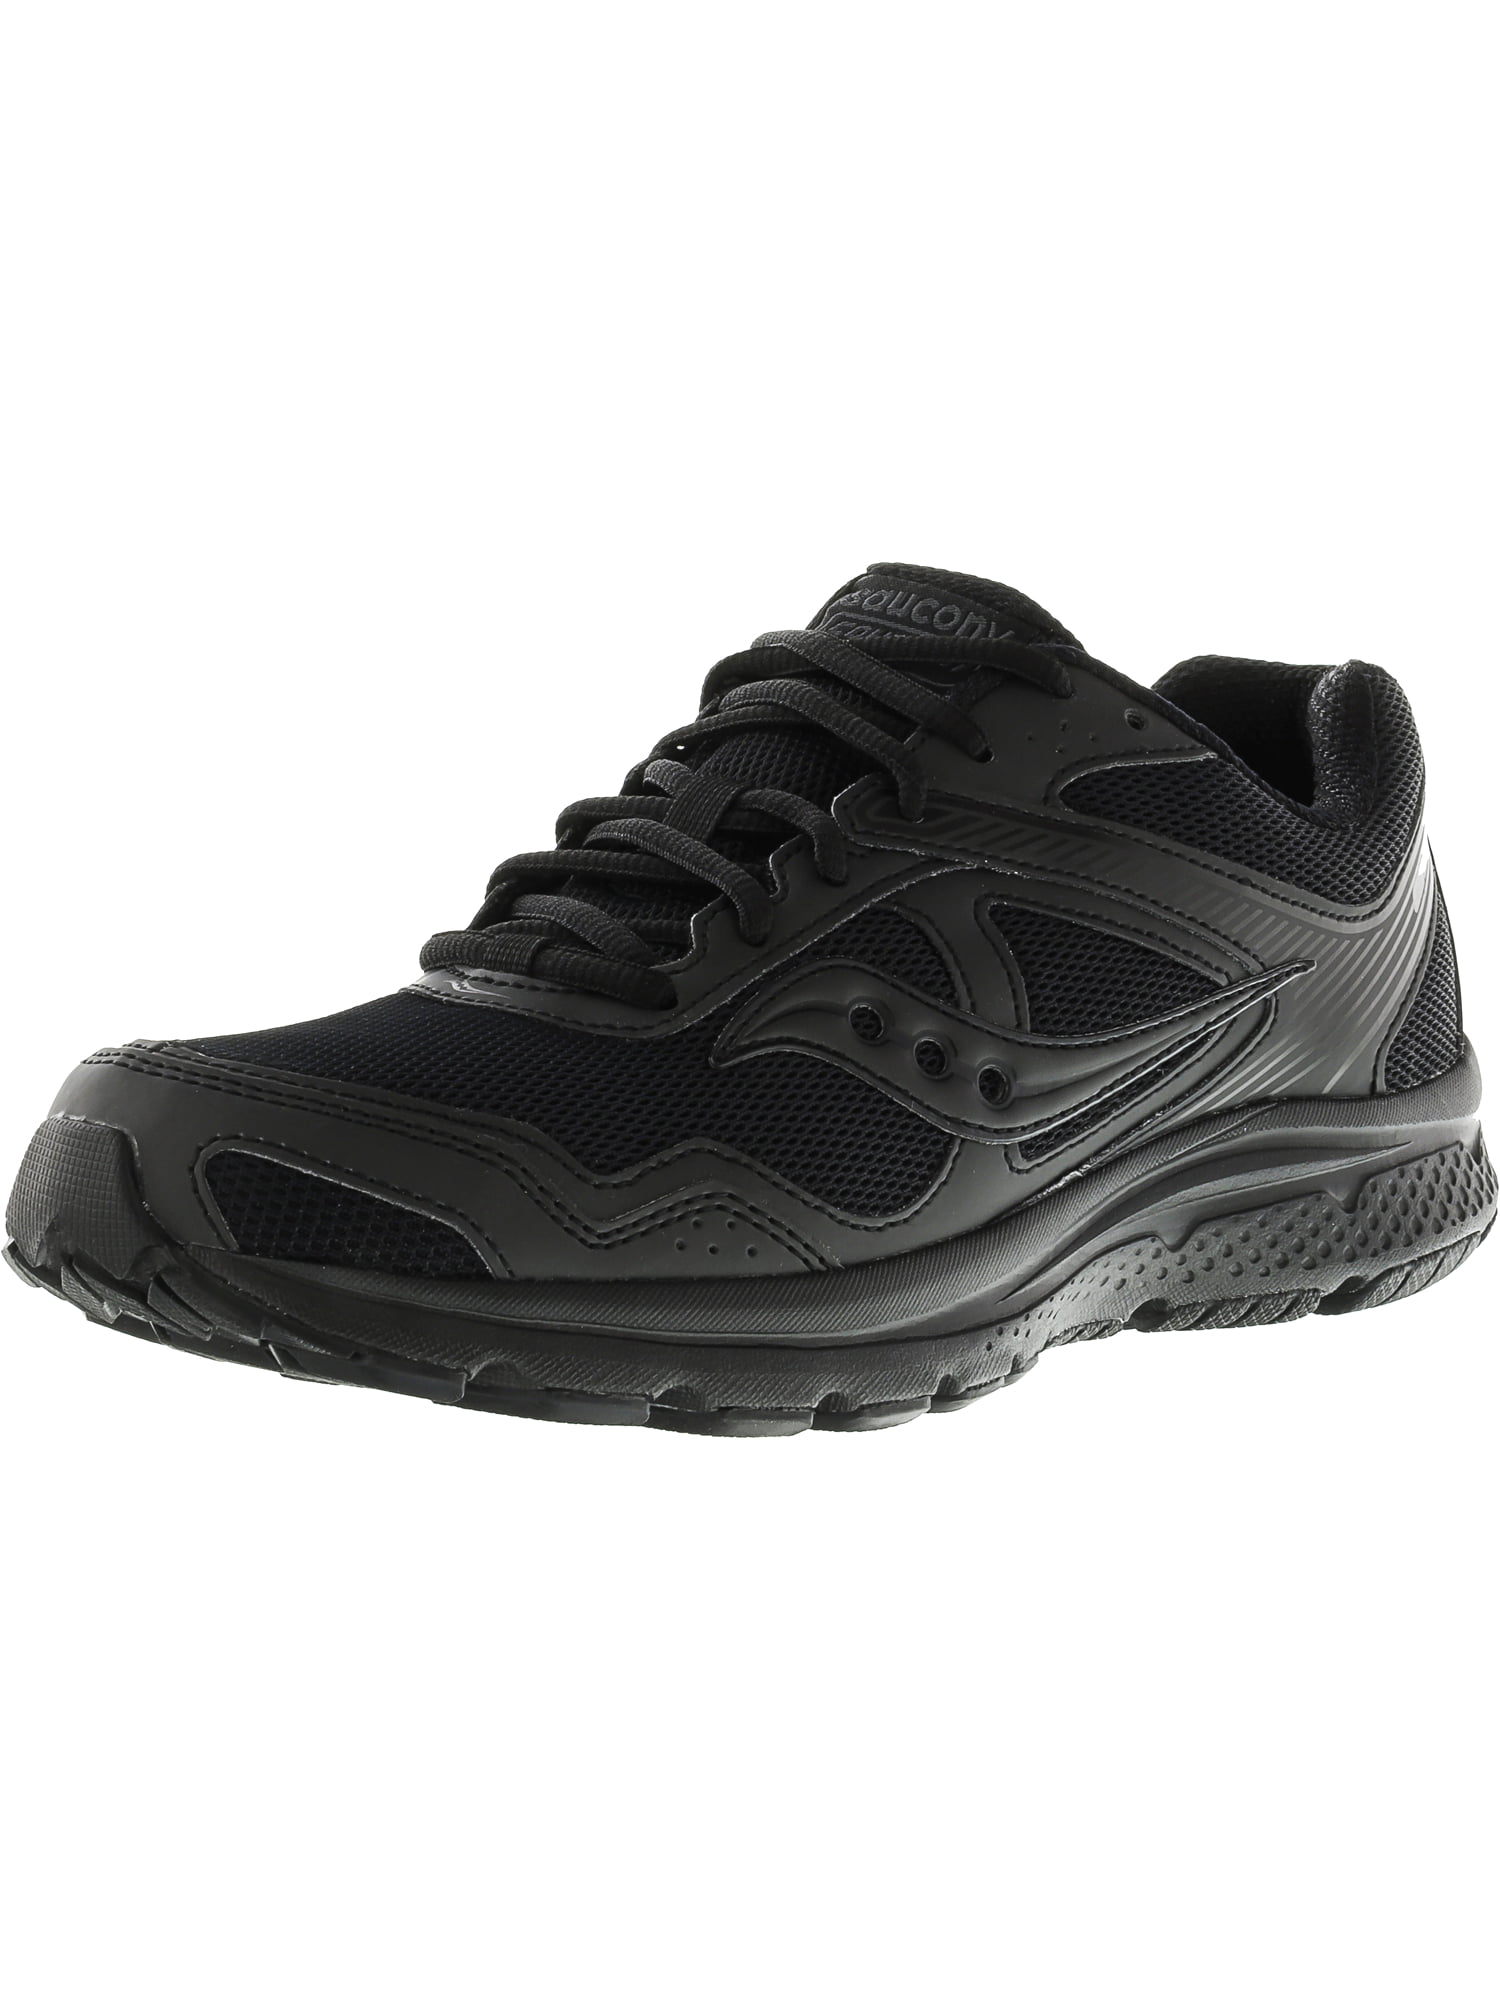 10 Black / Ankle-High Running Shoe 